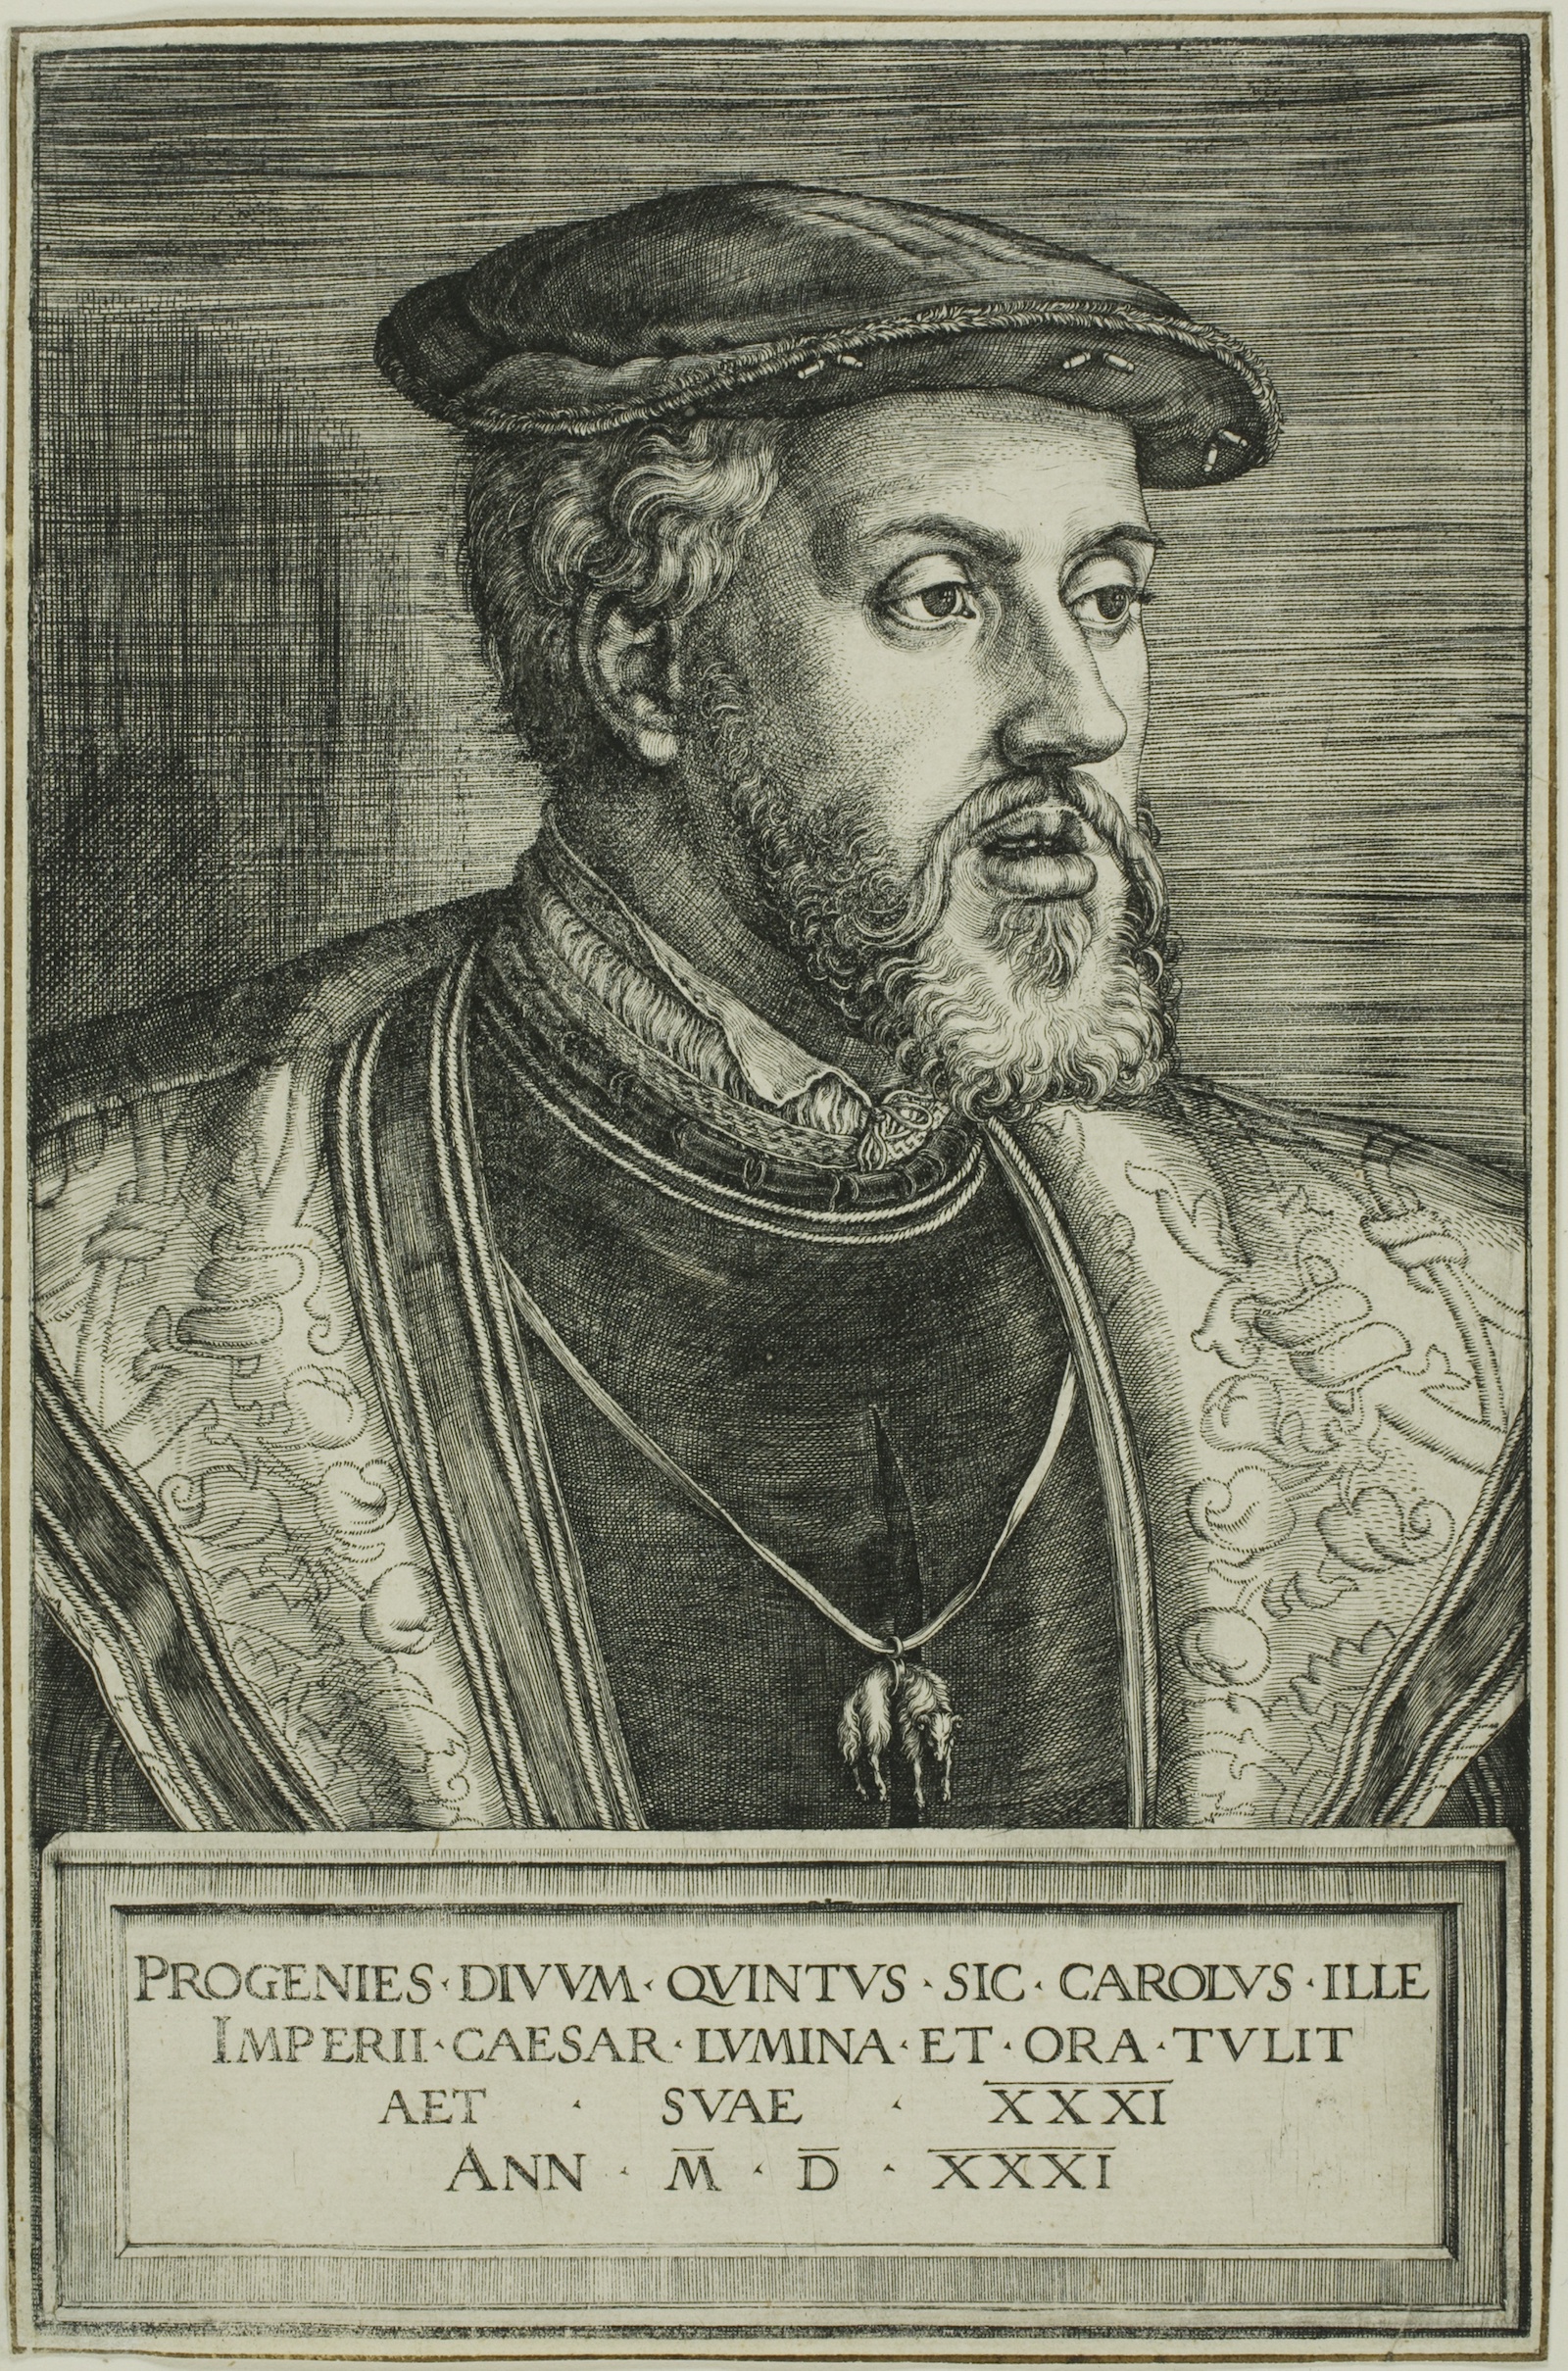 Emperor Charles V, by Barthel Beham, 1531. Art Institute of Chicago. Public Domain.